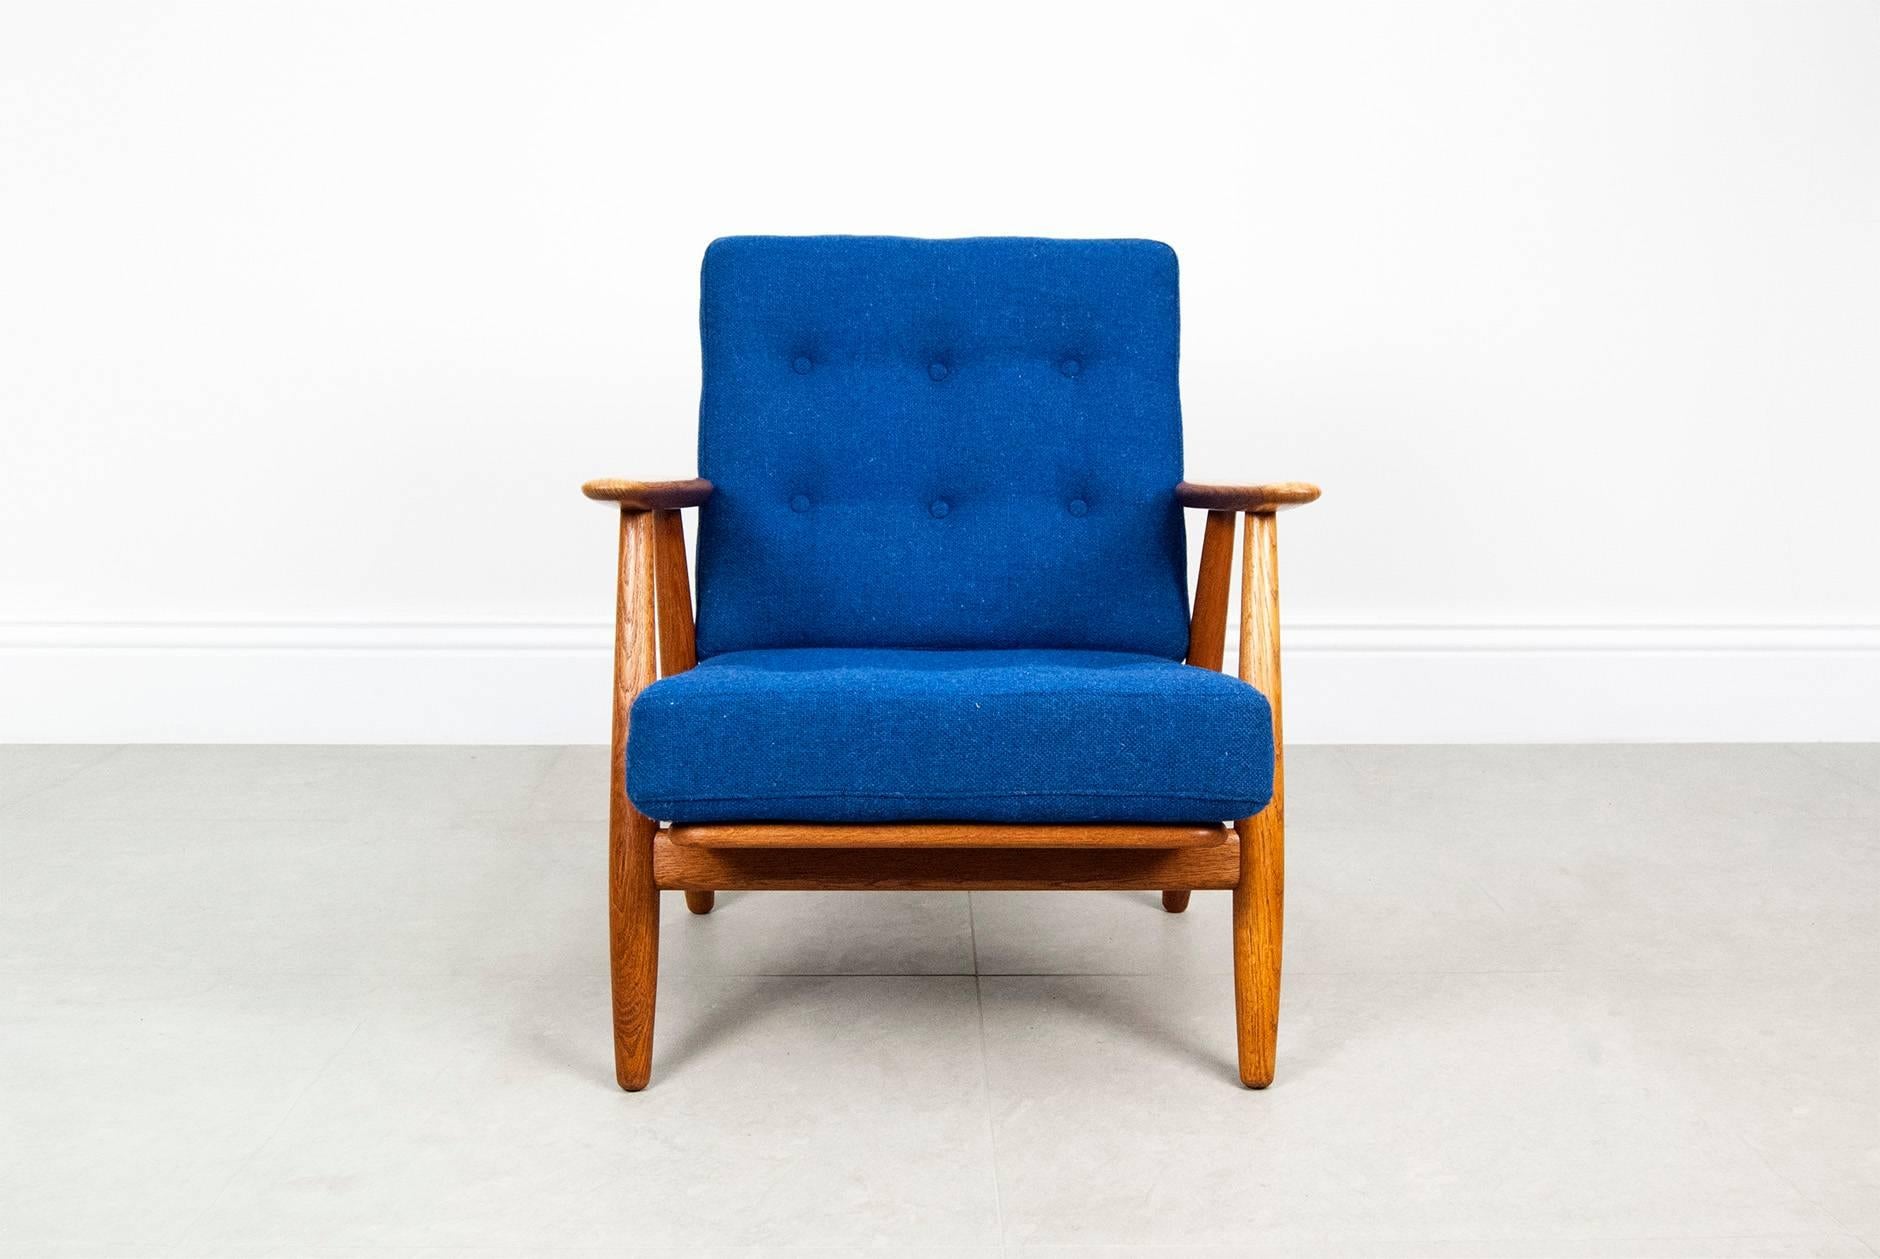 Hans J. Wegner GE-240 cigar chair, circa 1955. Produced by GETAMA, Denmark. Solid oak frame, original sprung cushions reupholstered in blue Bute tweed wool fabric.